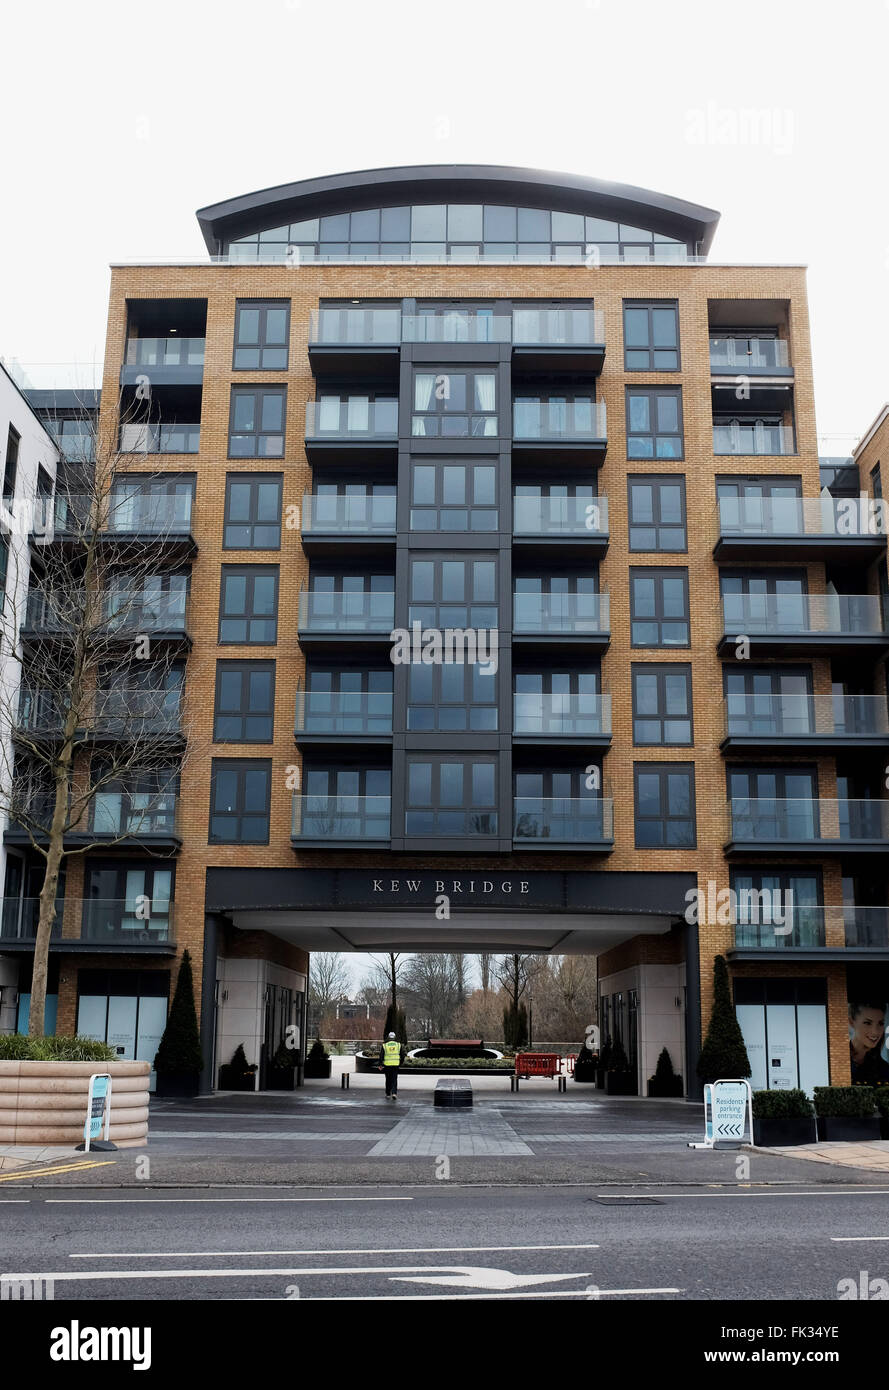 Die Kew Bridge Apartments Entwicklung bei Brentford Hounslow West London UK Stockfoto